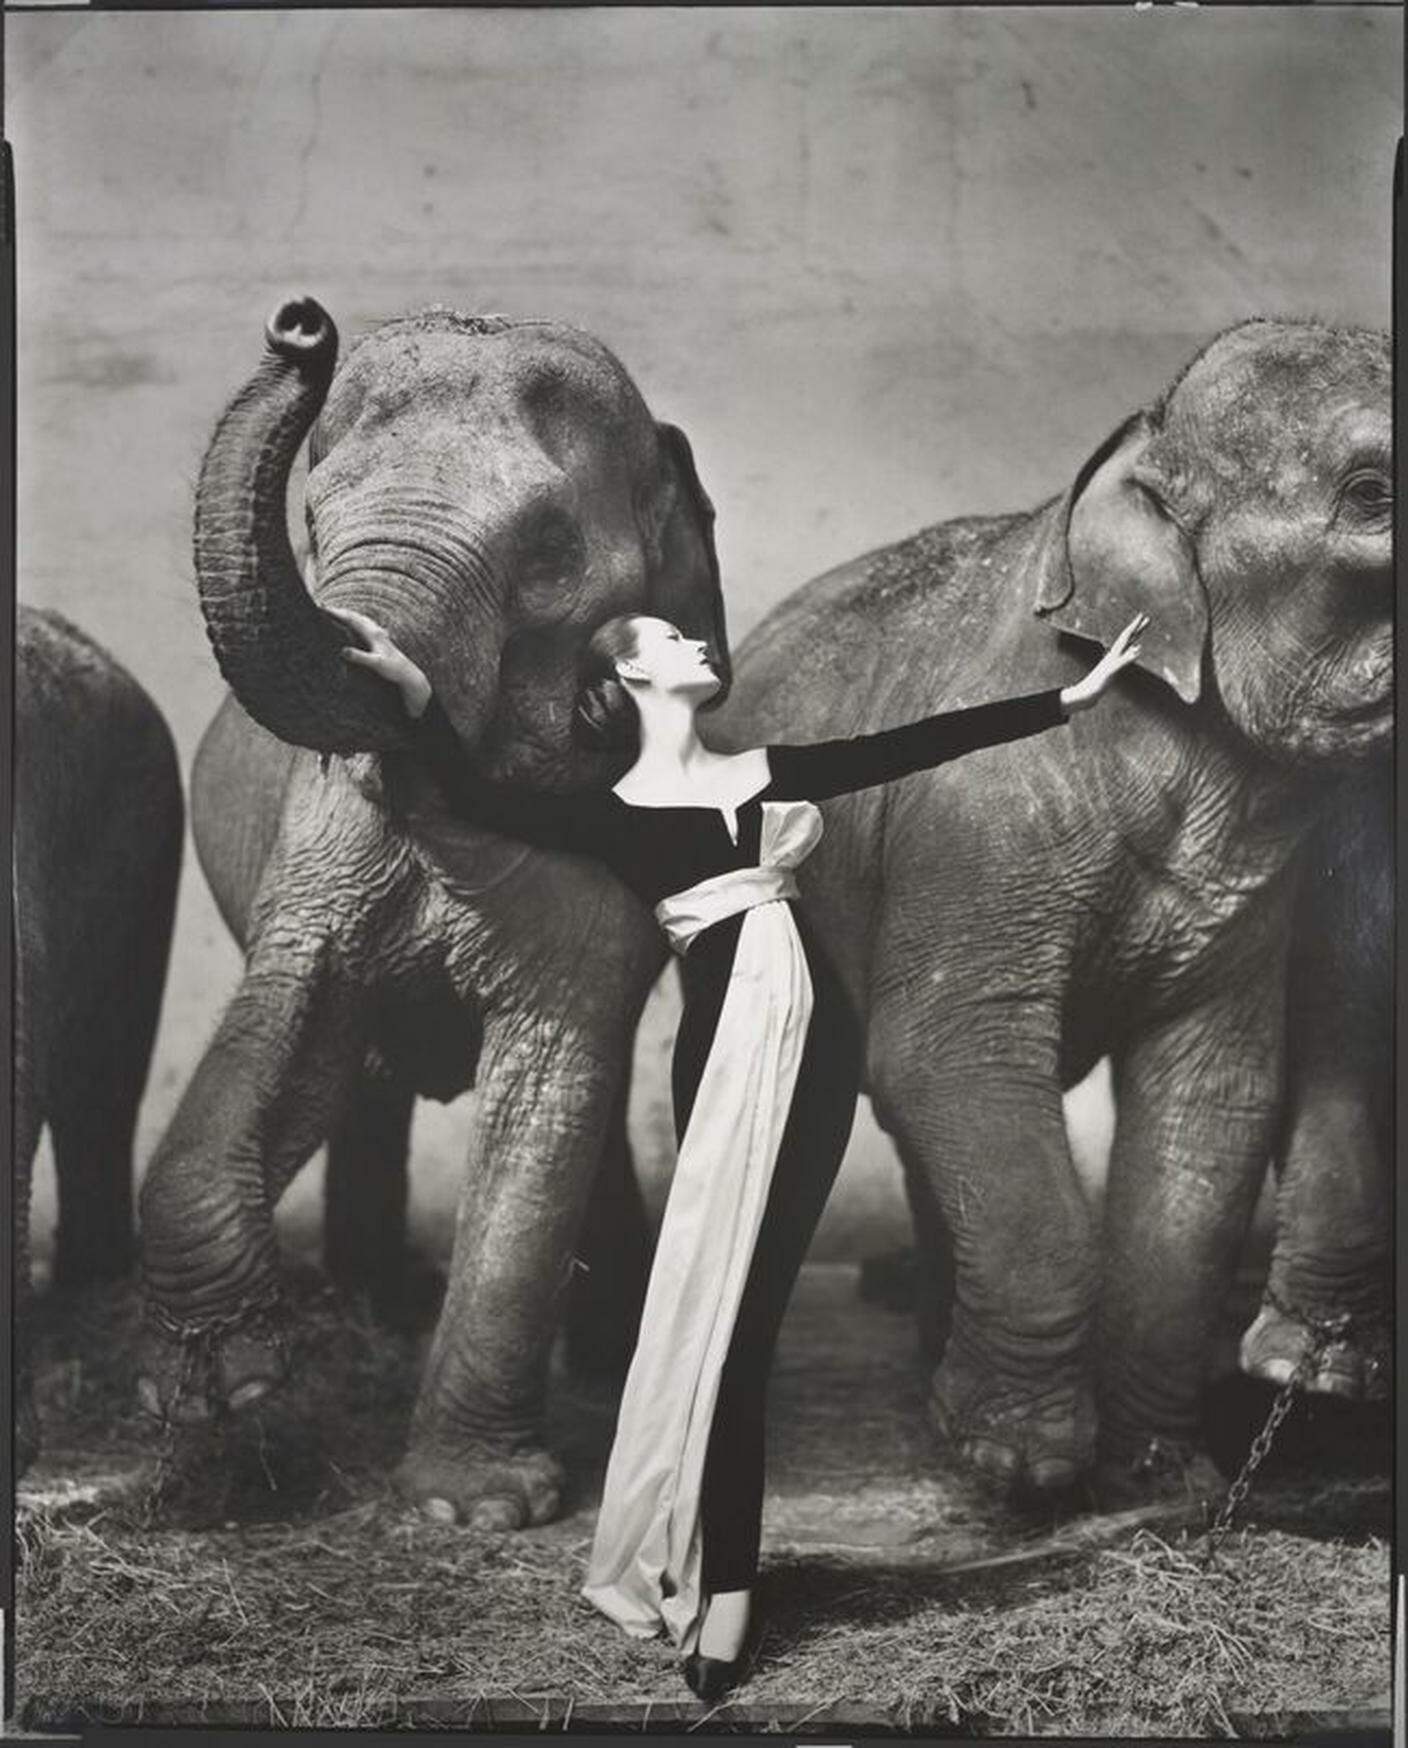 Richard Avedon, Dovima with elephants, evening dress by Dior, Cirque d'Hiver, Paris, August 1955